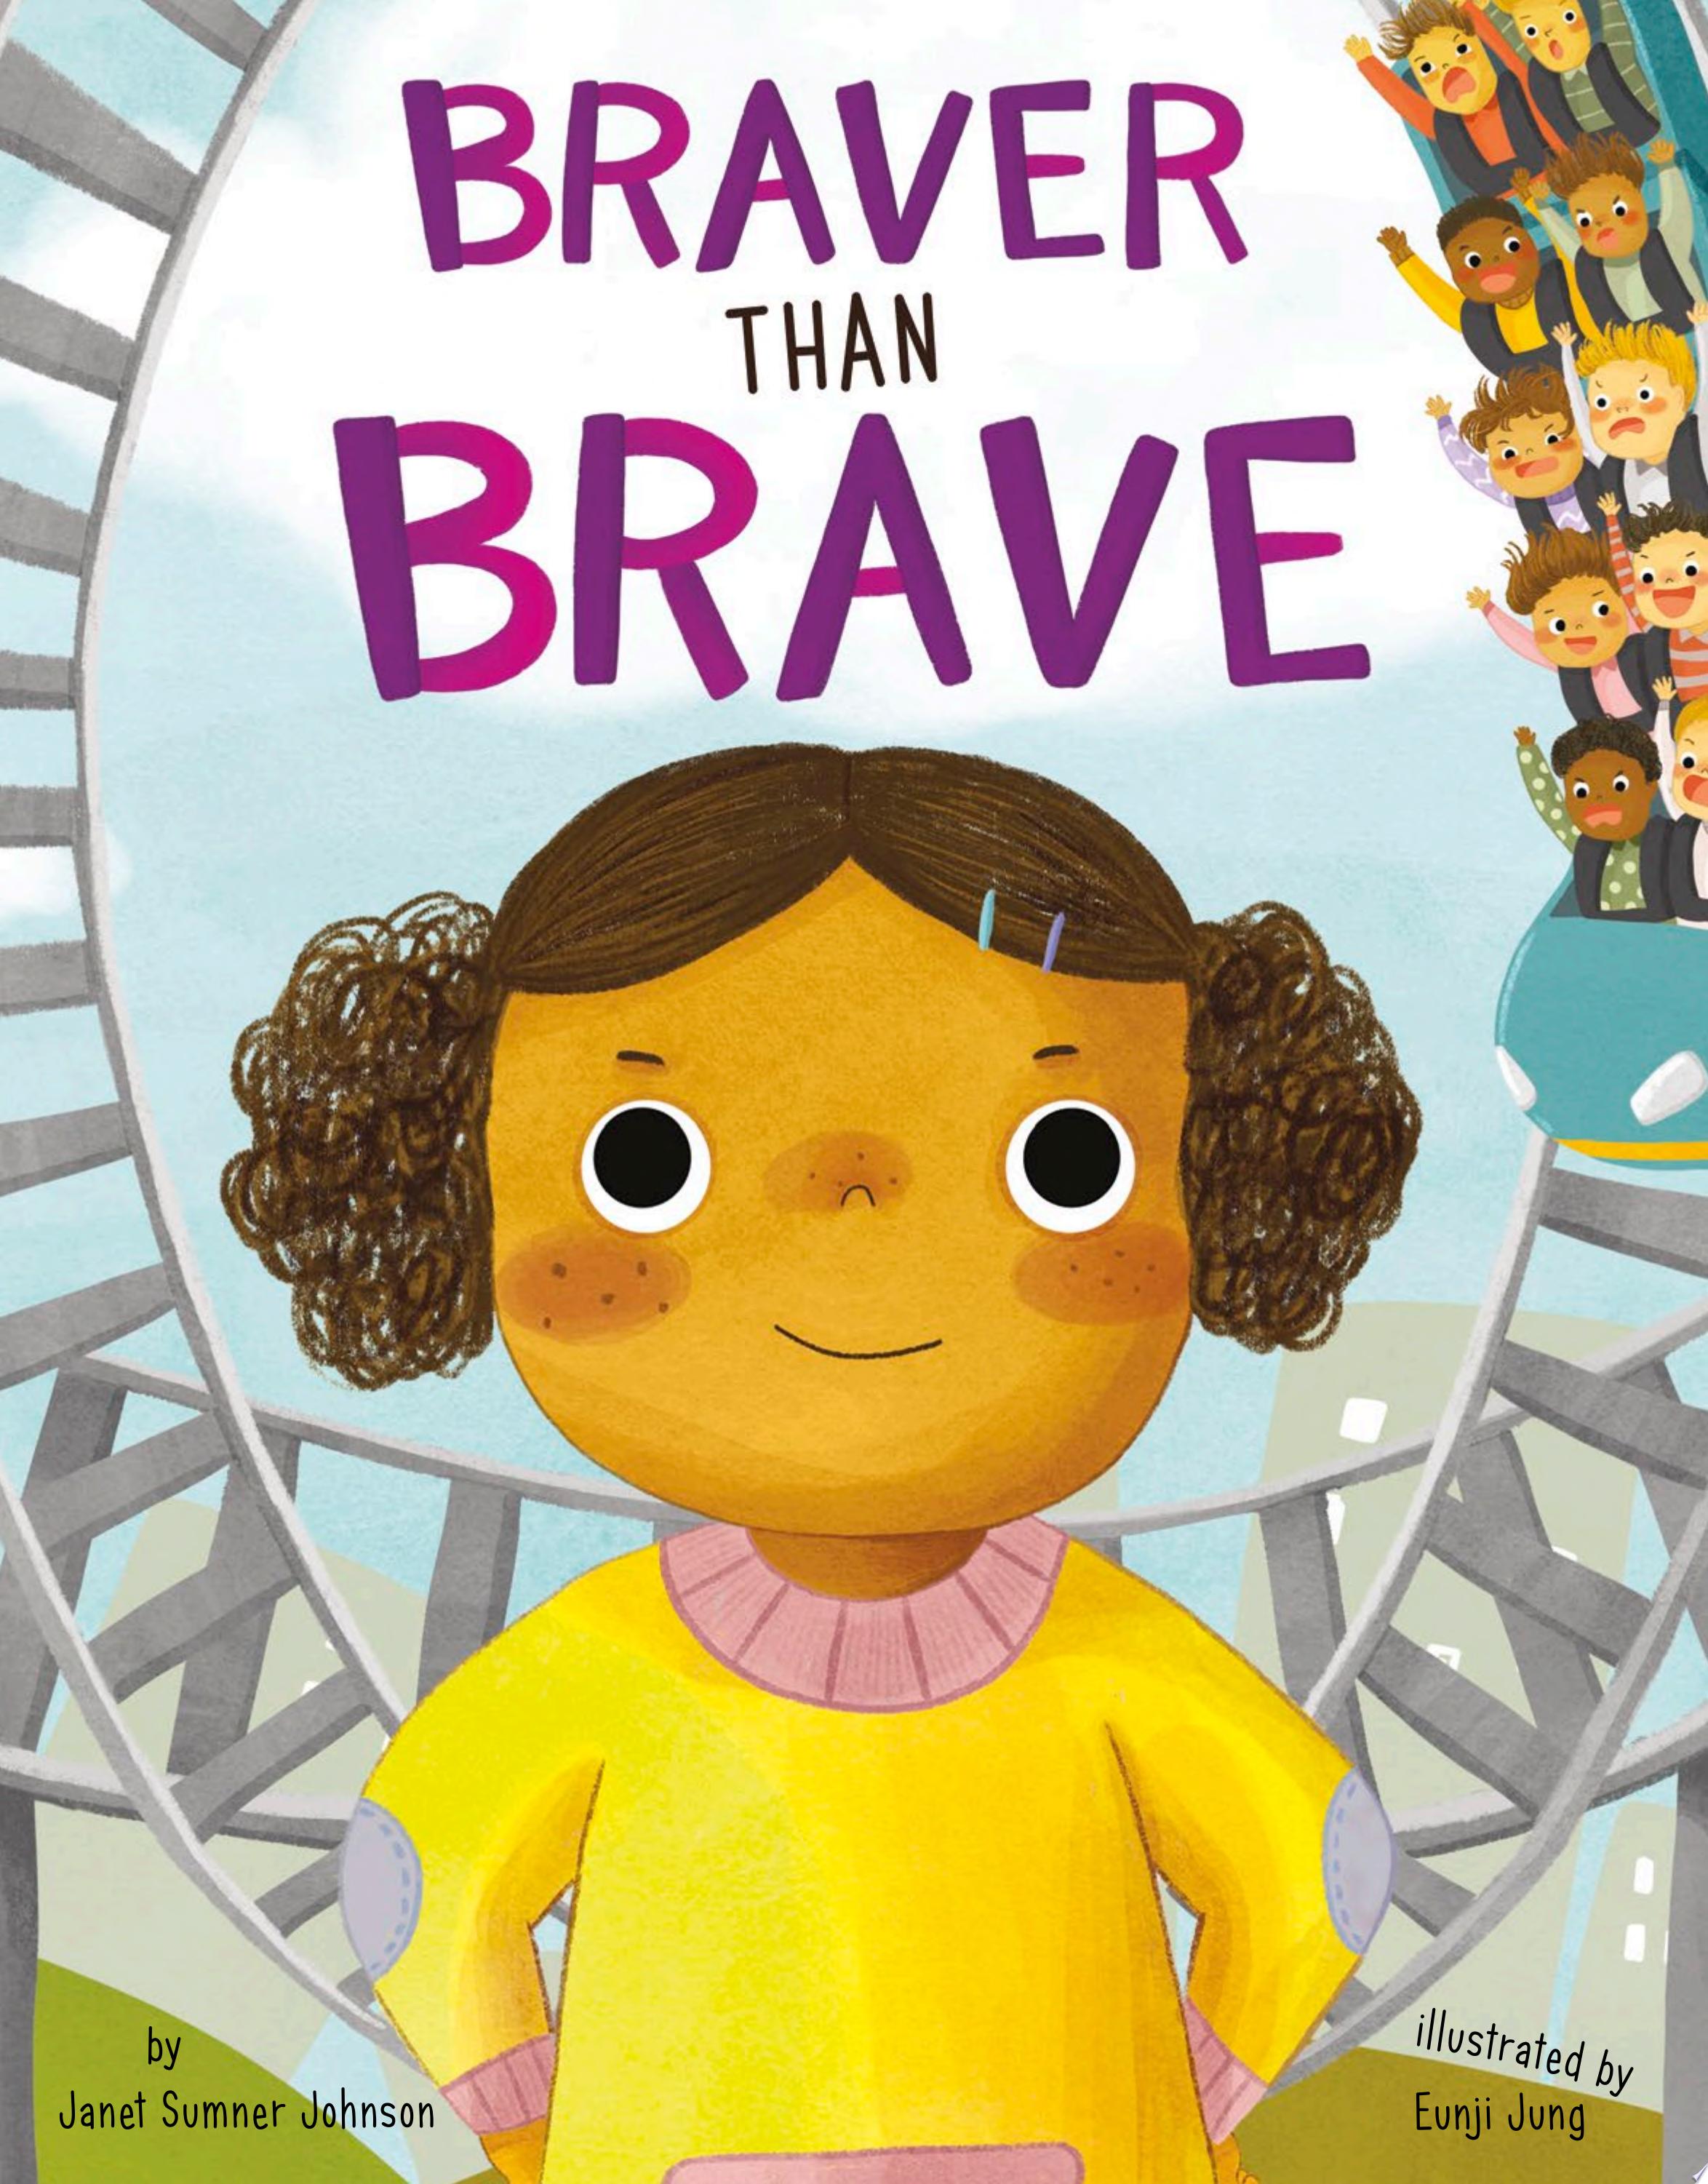 Image for "Braver Than Brave"